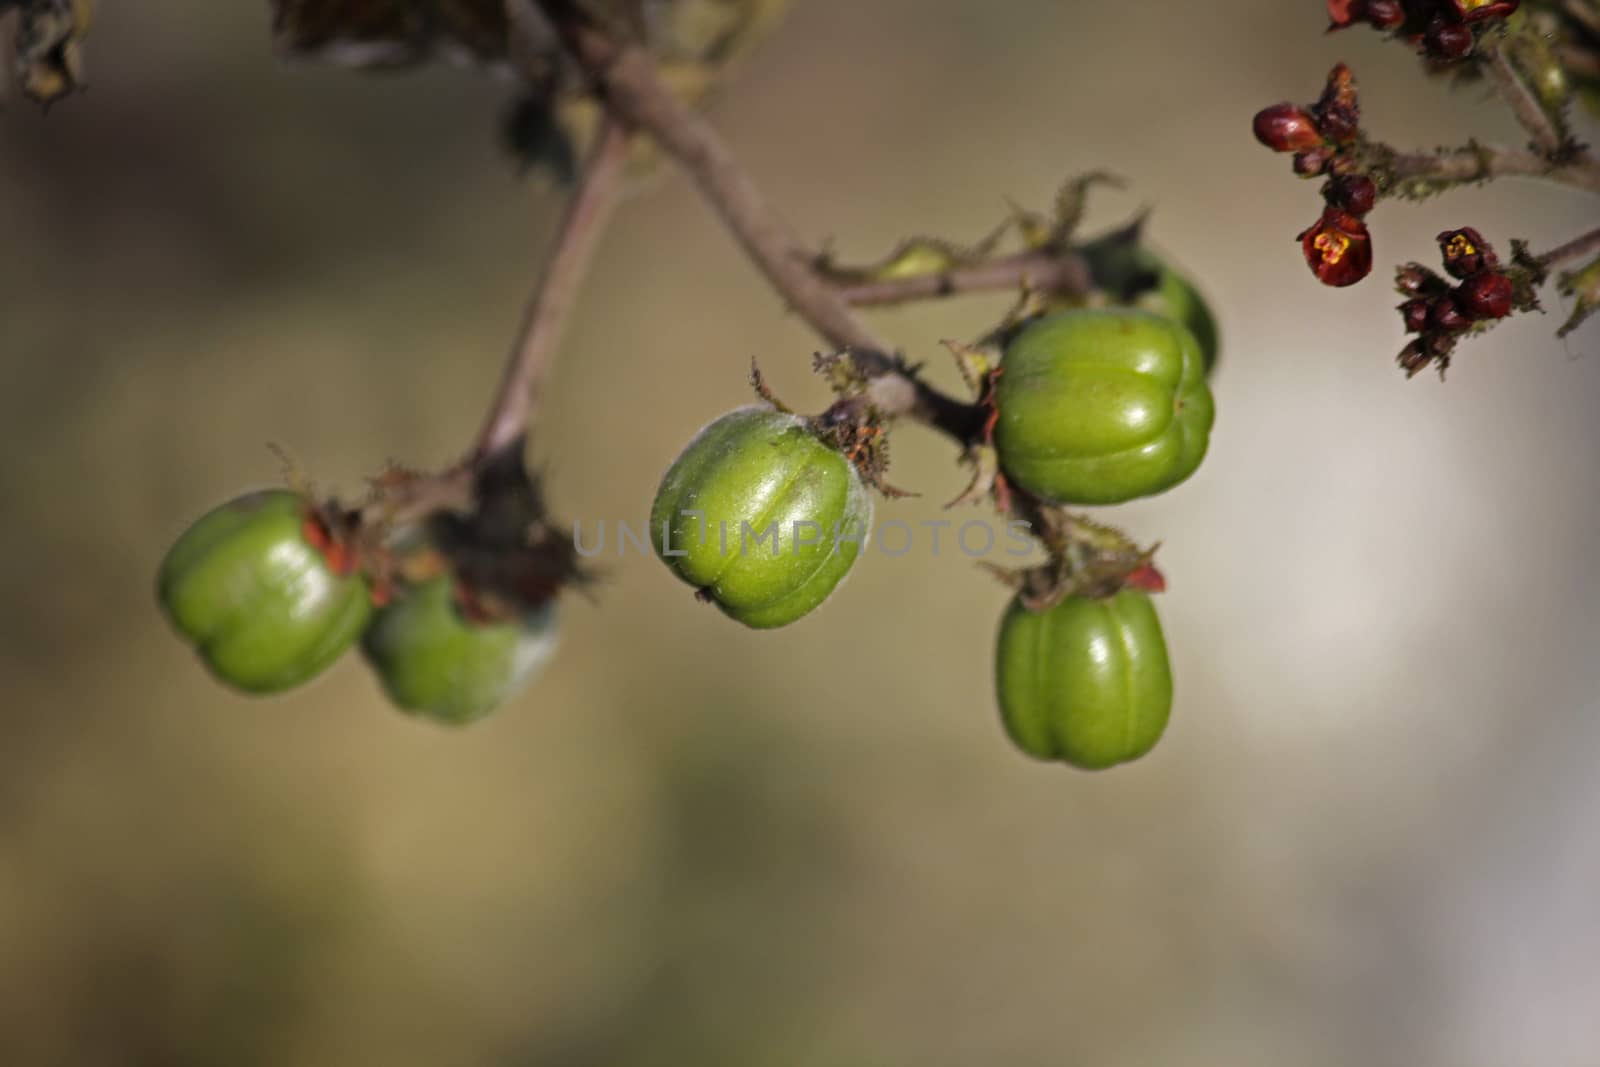 Bellyache Bush, Cotton-leaf physic nut, Jatropha gossypiifolia by yands